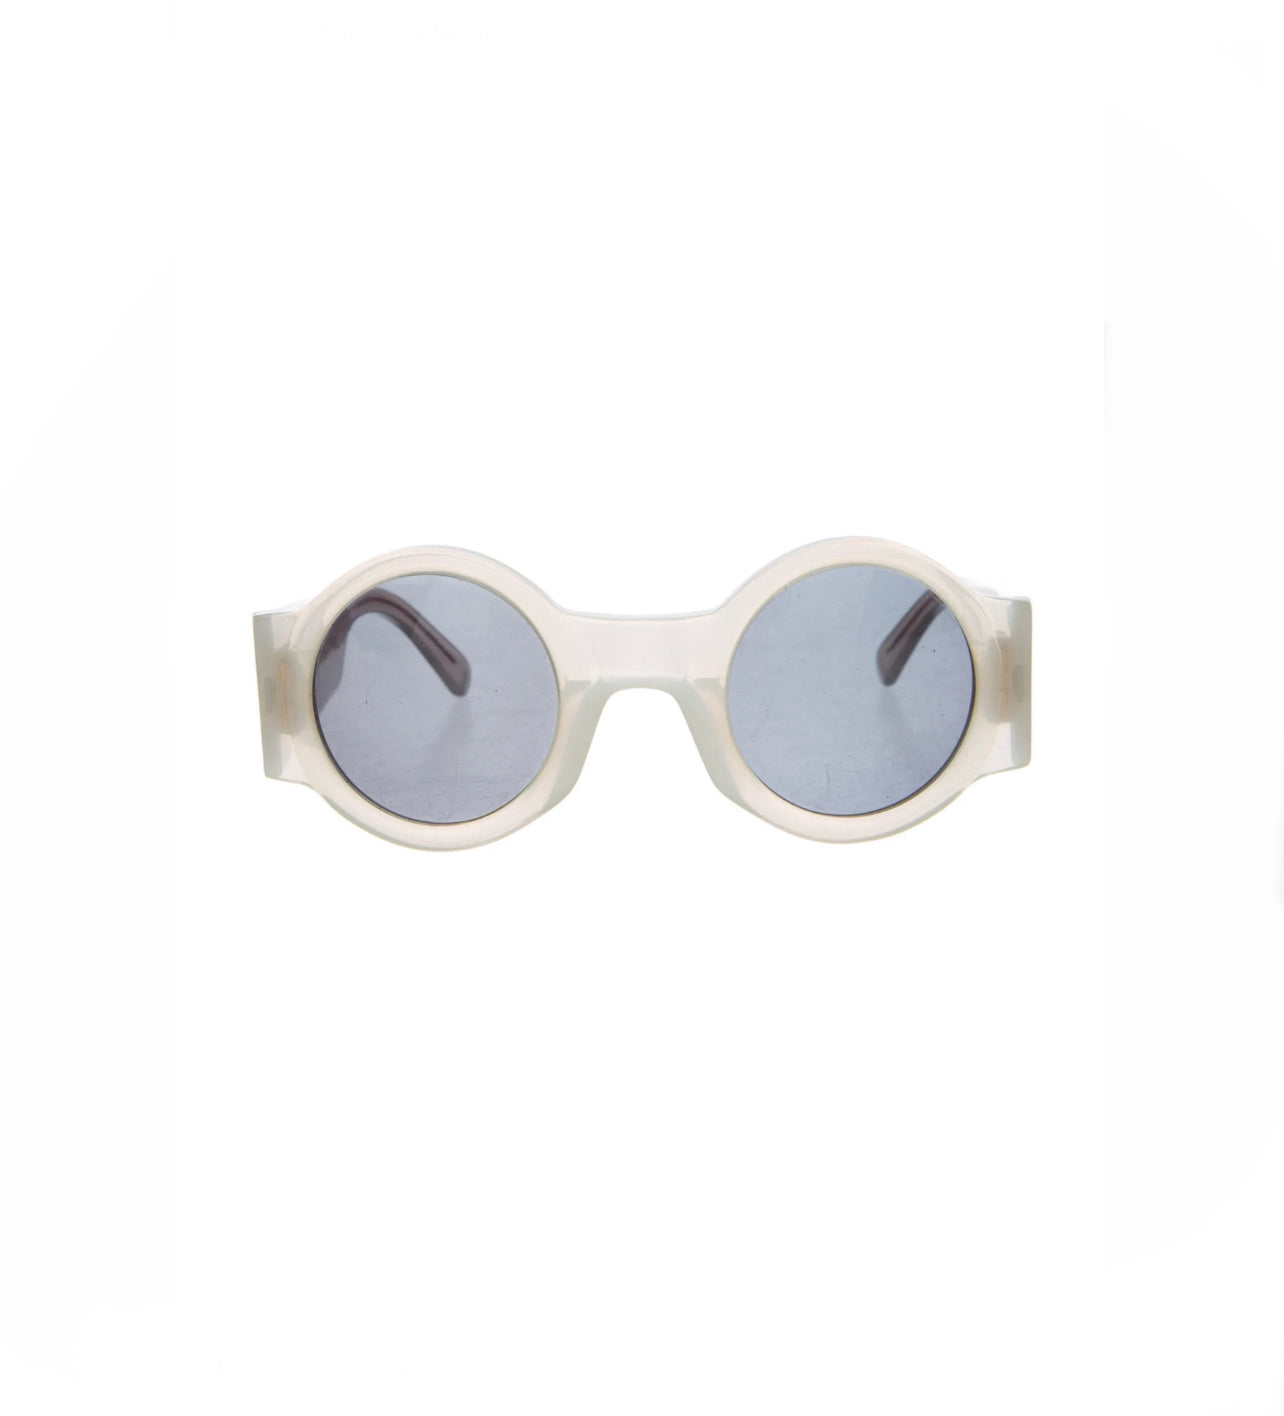 Load image into Gallery viewer, Dries Van Noten x Linda Farrow Round Sunglasses
